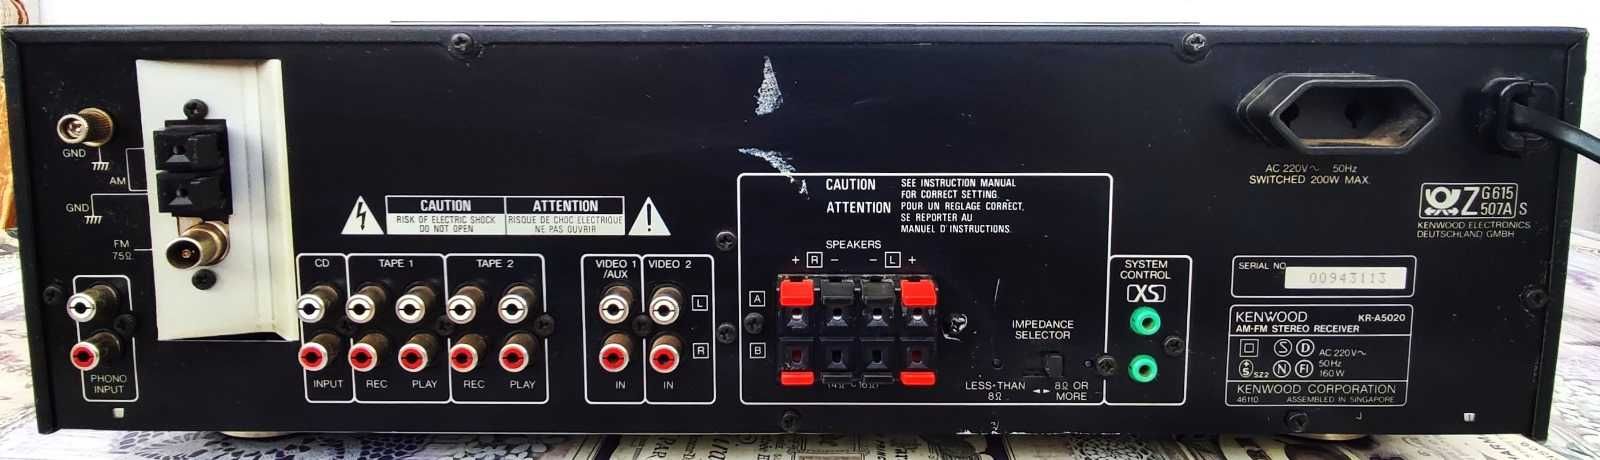 Amplificator Kenwood KR-A5020